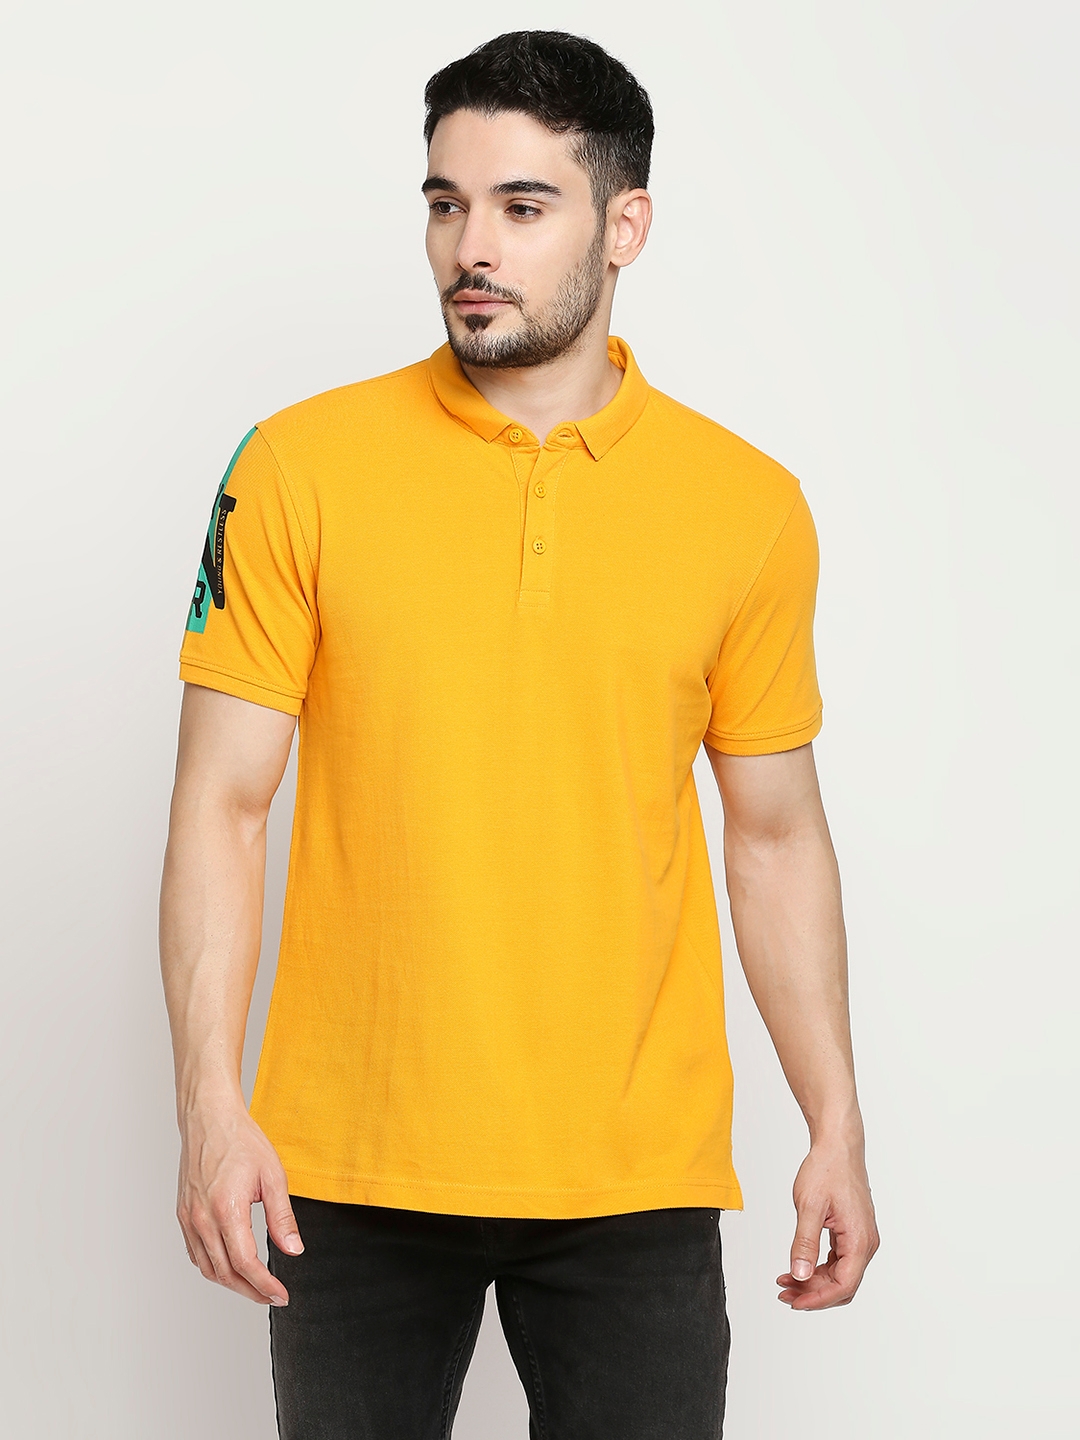 Spykar Chrome Yellow Cotton Half Sleeve Plain Casual T-Shirt For Men